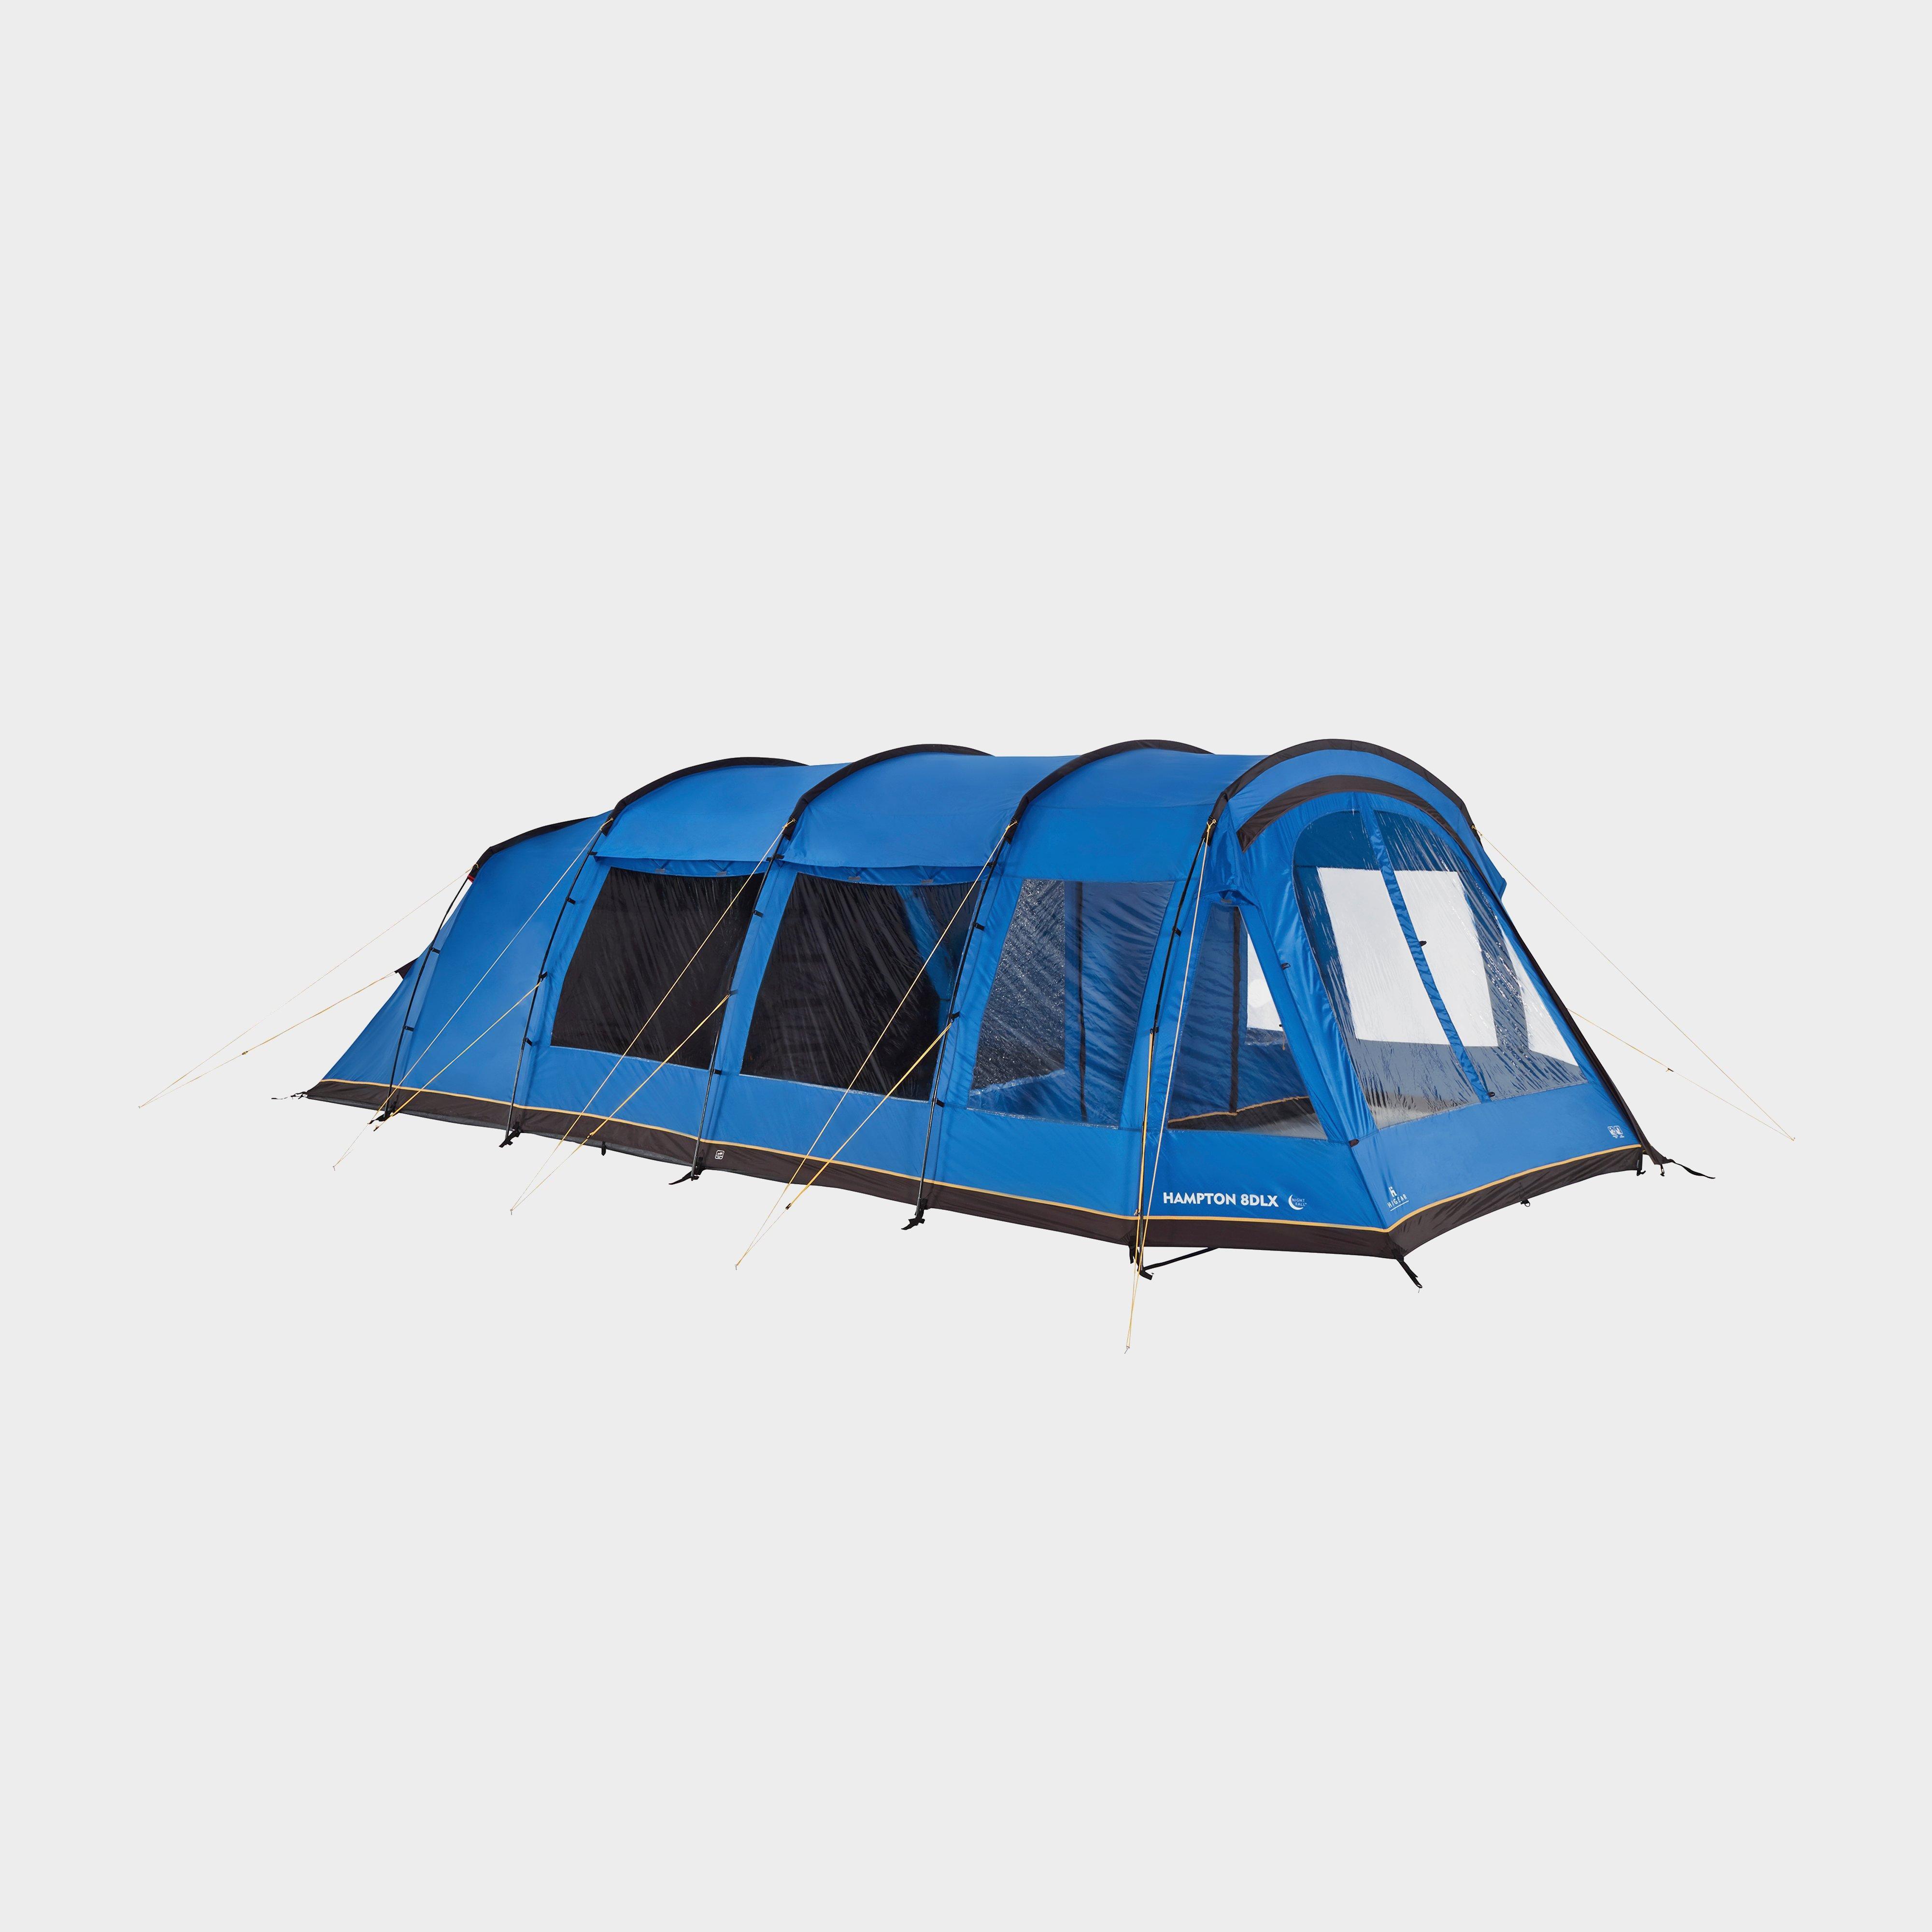 Photos - Tent Hi-Gear Hampton 8 DLX Nightfall , Blue 